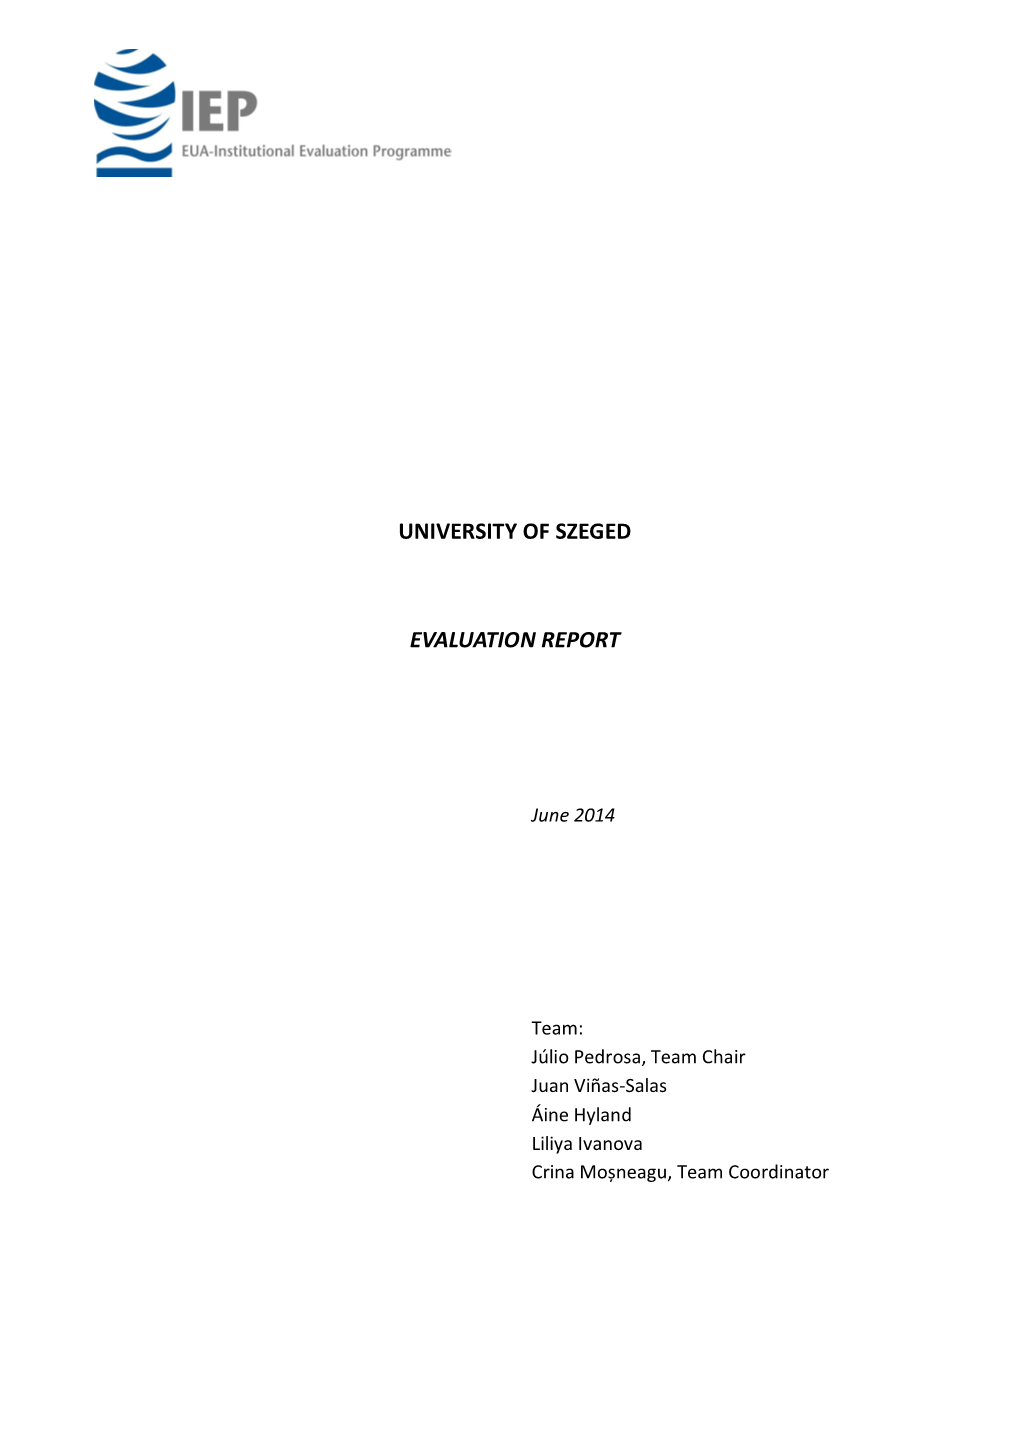 University of Szeged Evaluation Report